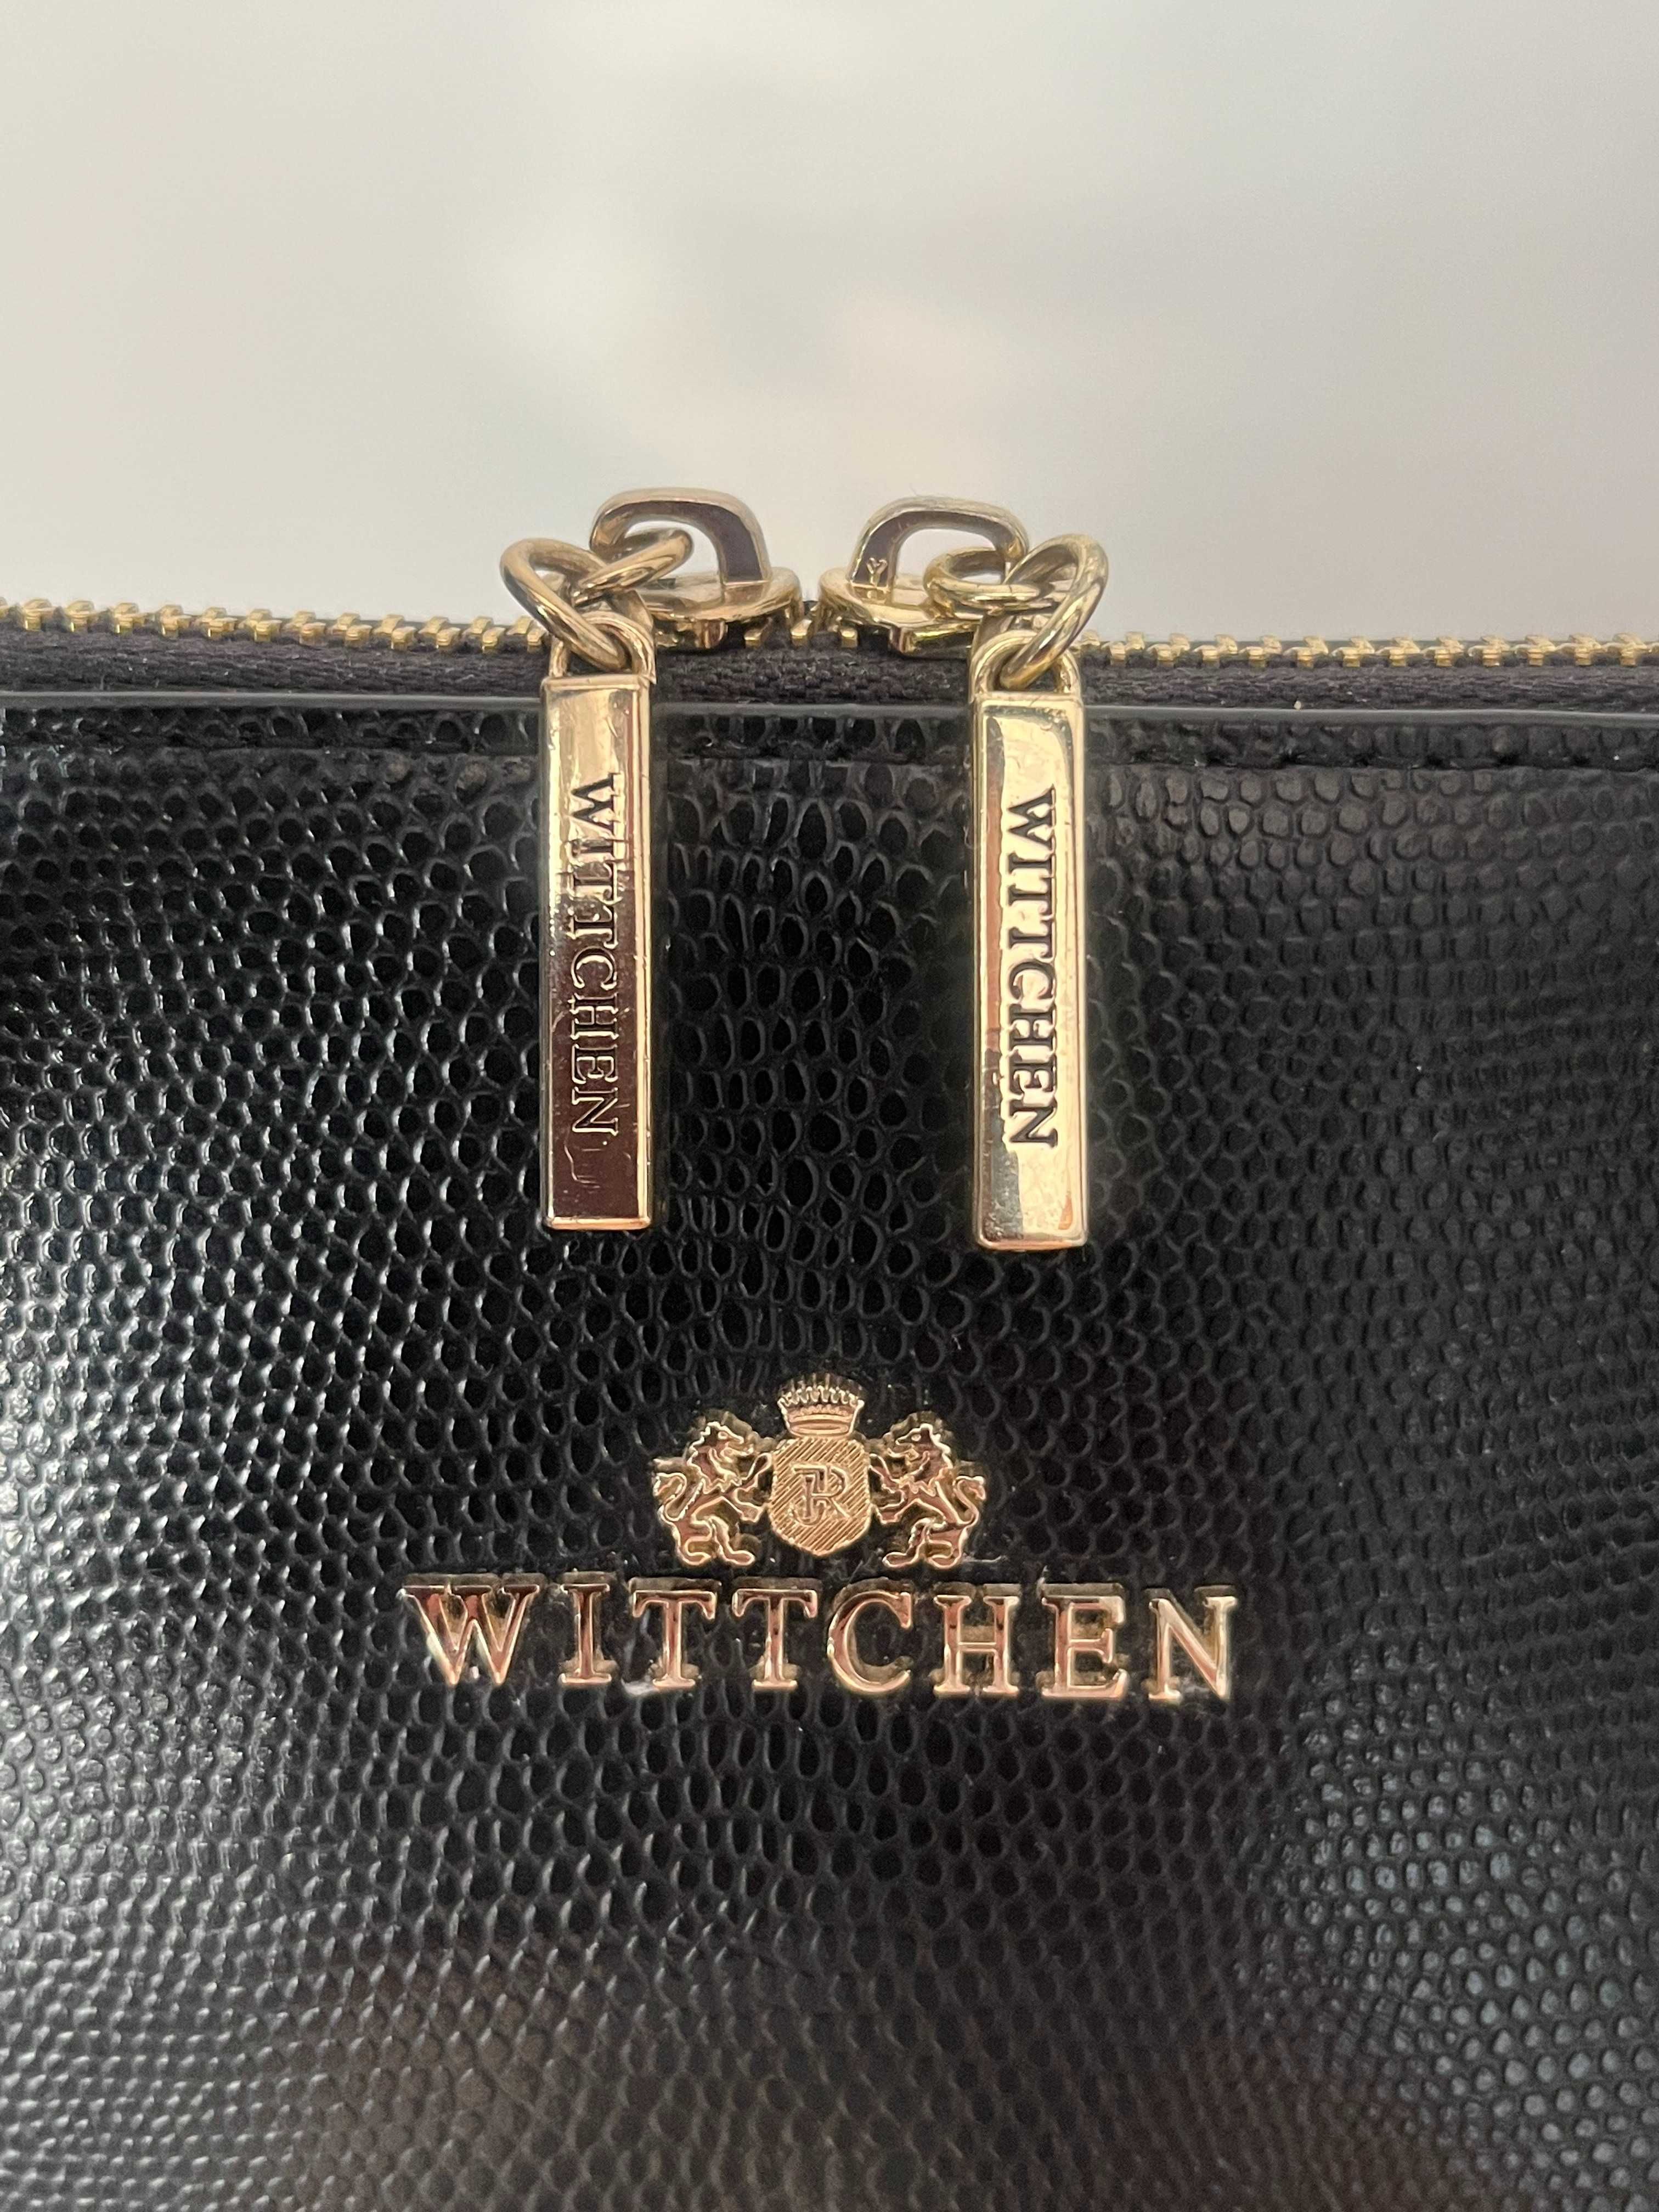 Damska torba skórzana Wittchen typu kuferek.